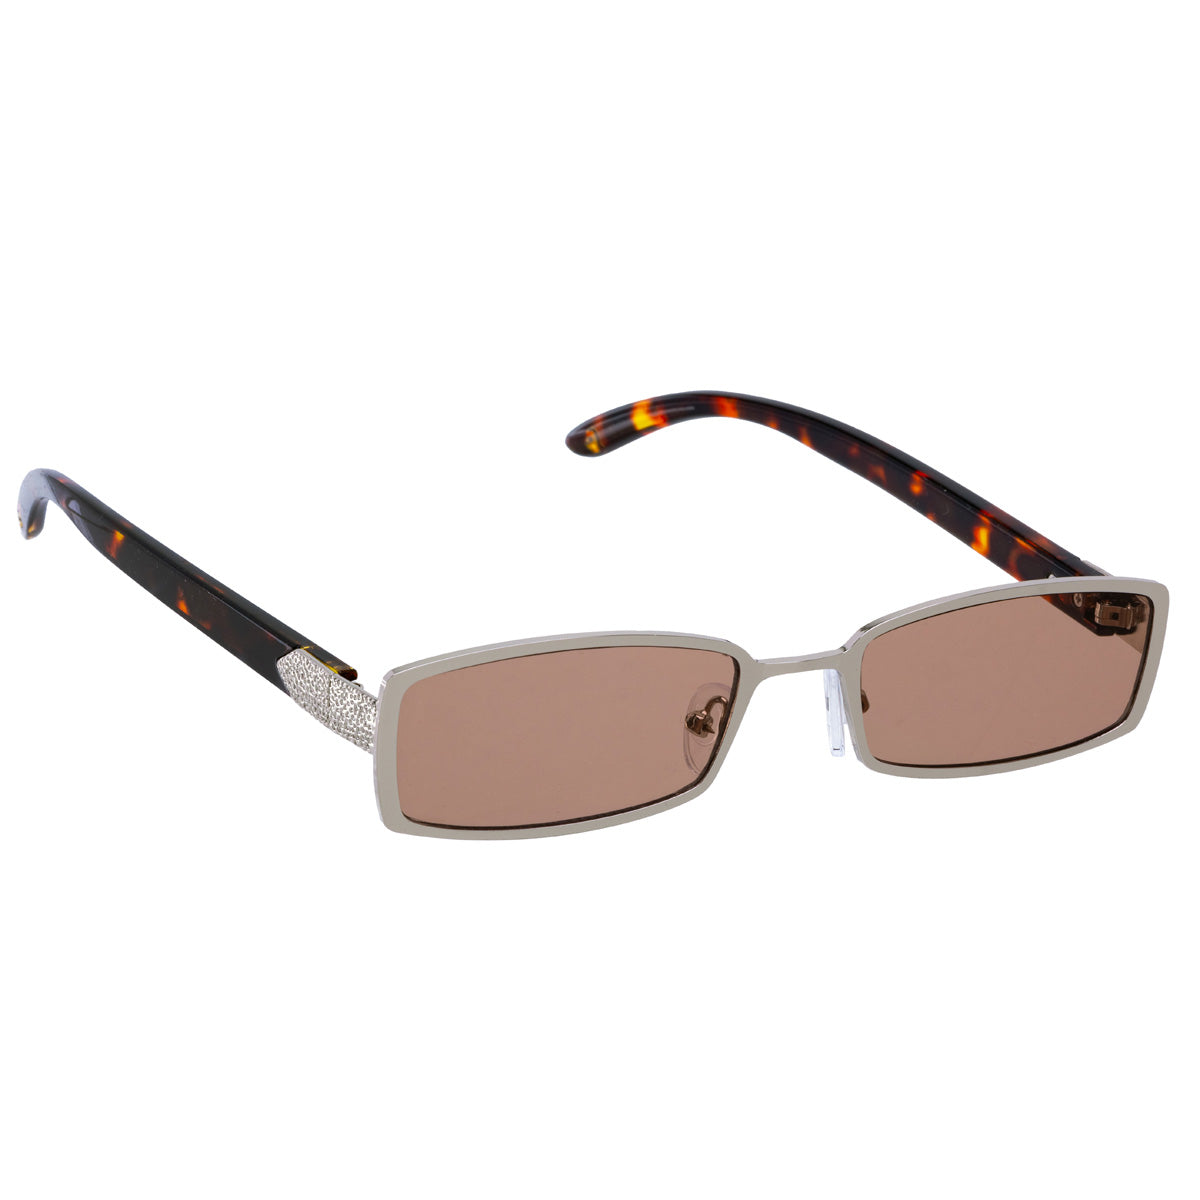 Narrow rectangular sunglasses